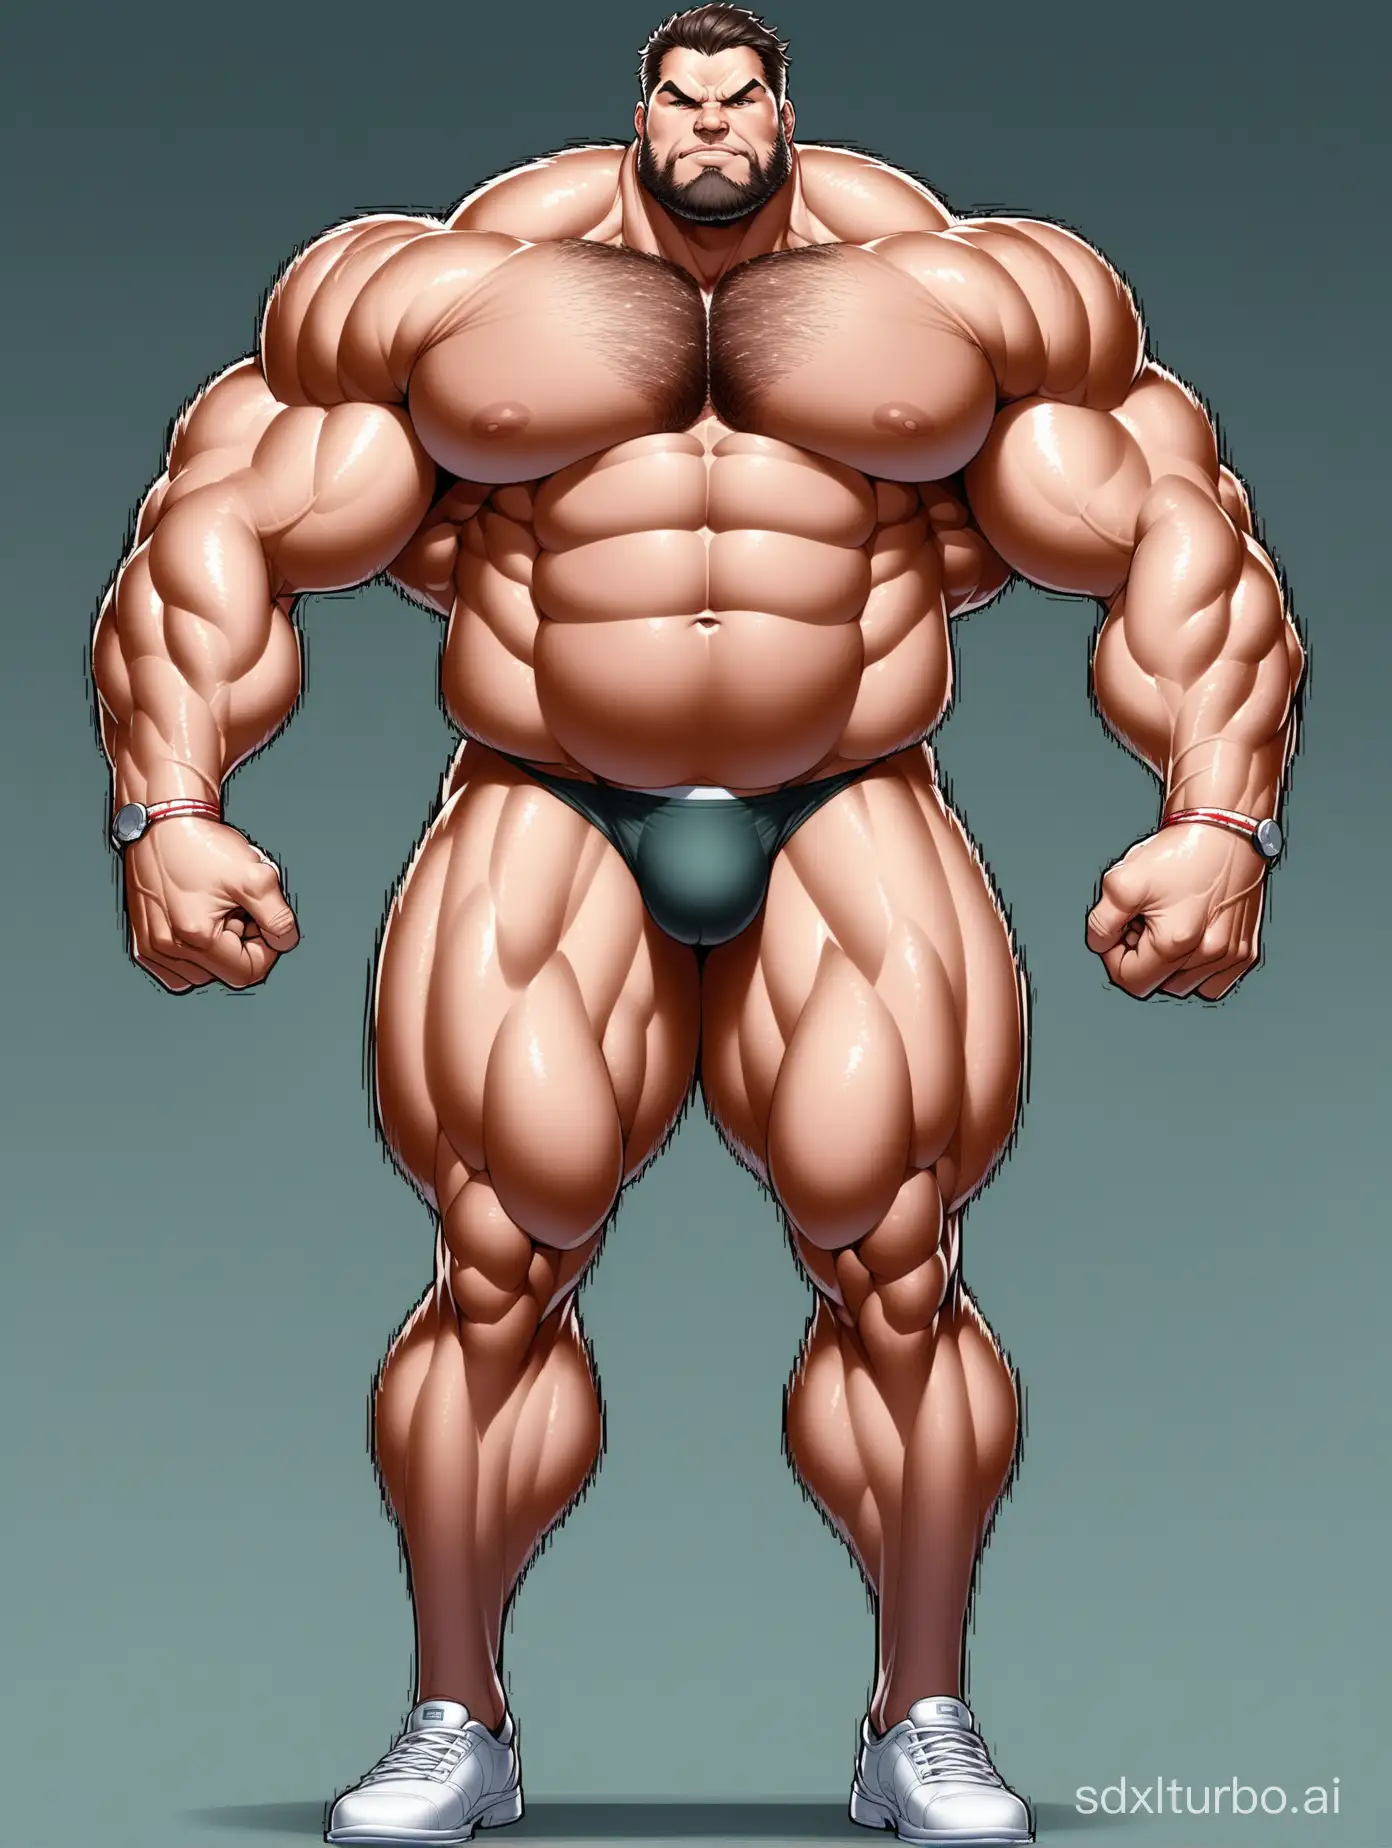 Massive-Muscle-Bodybuilder-Showing-Off-Biceps-in-White-Underwear